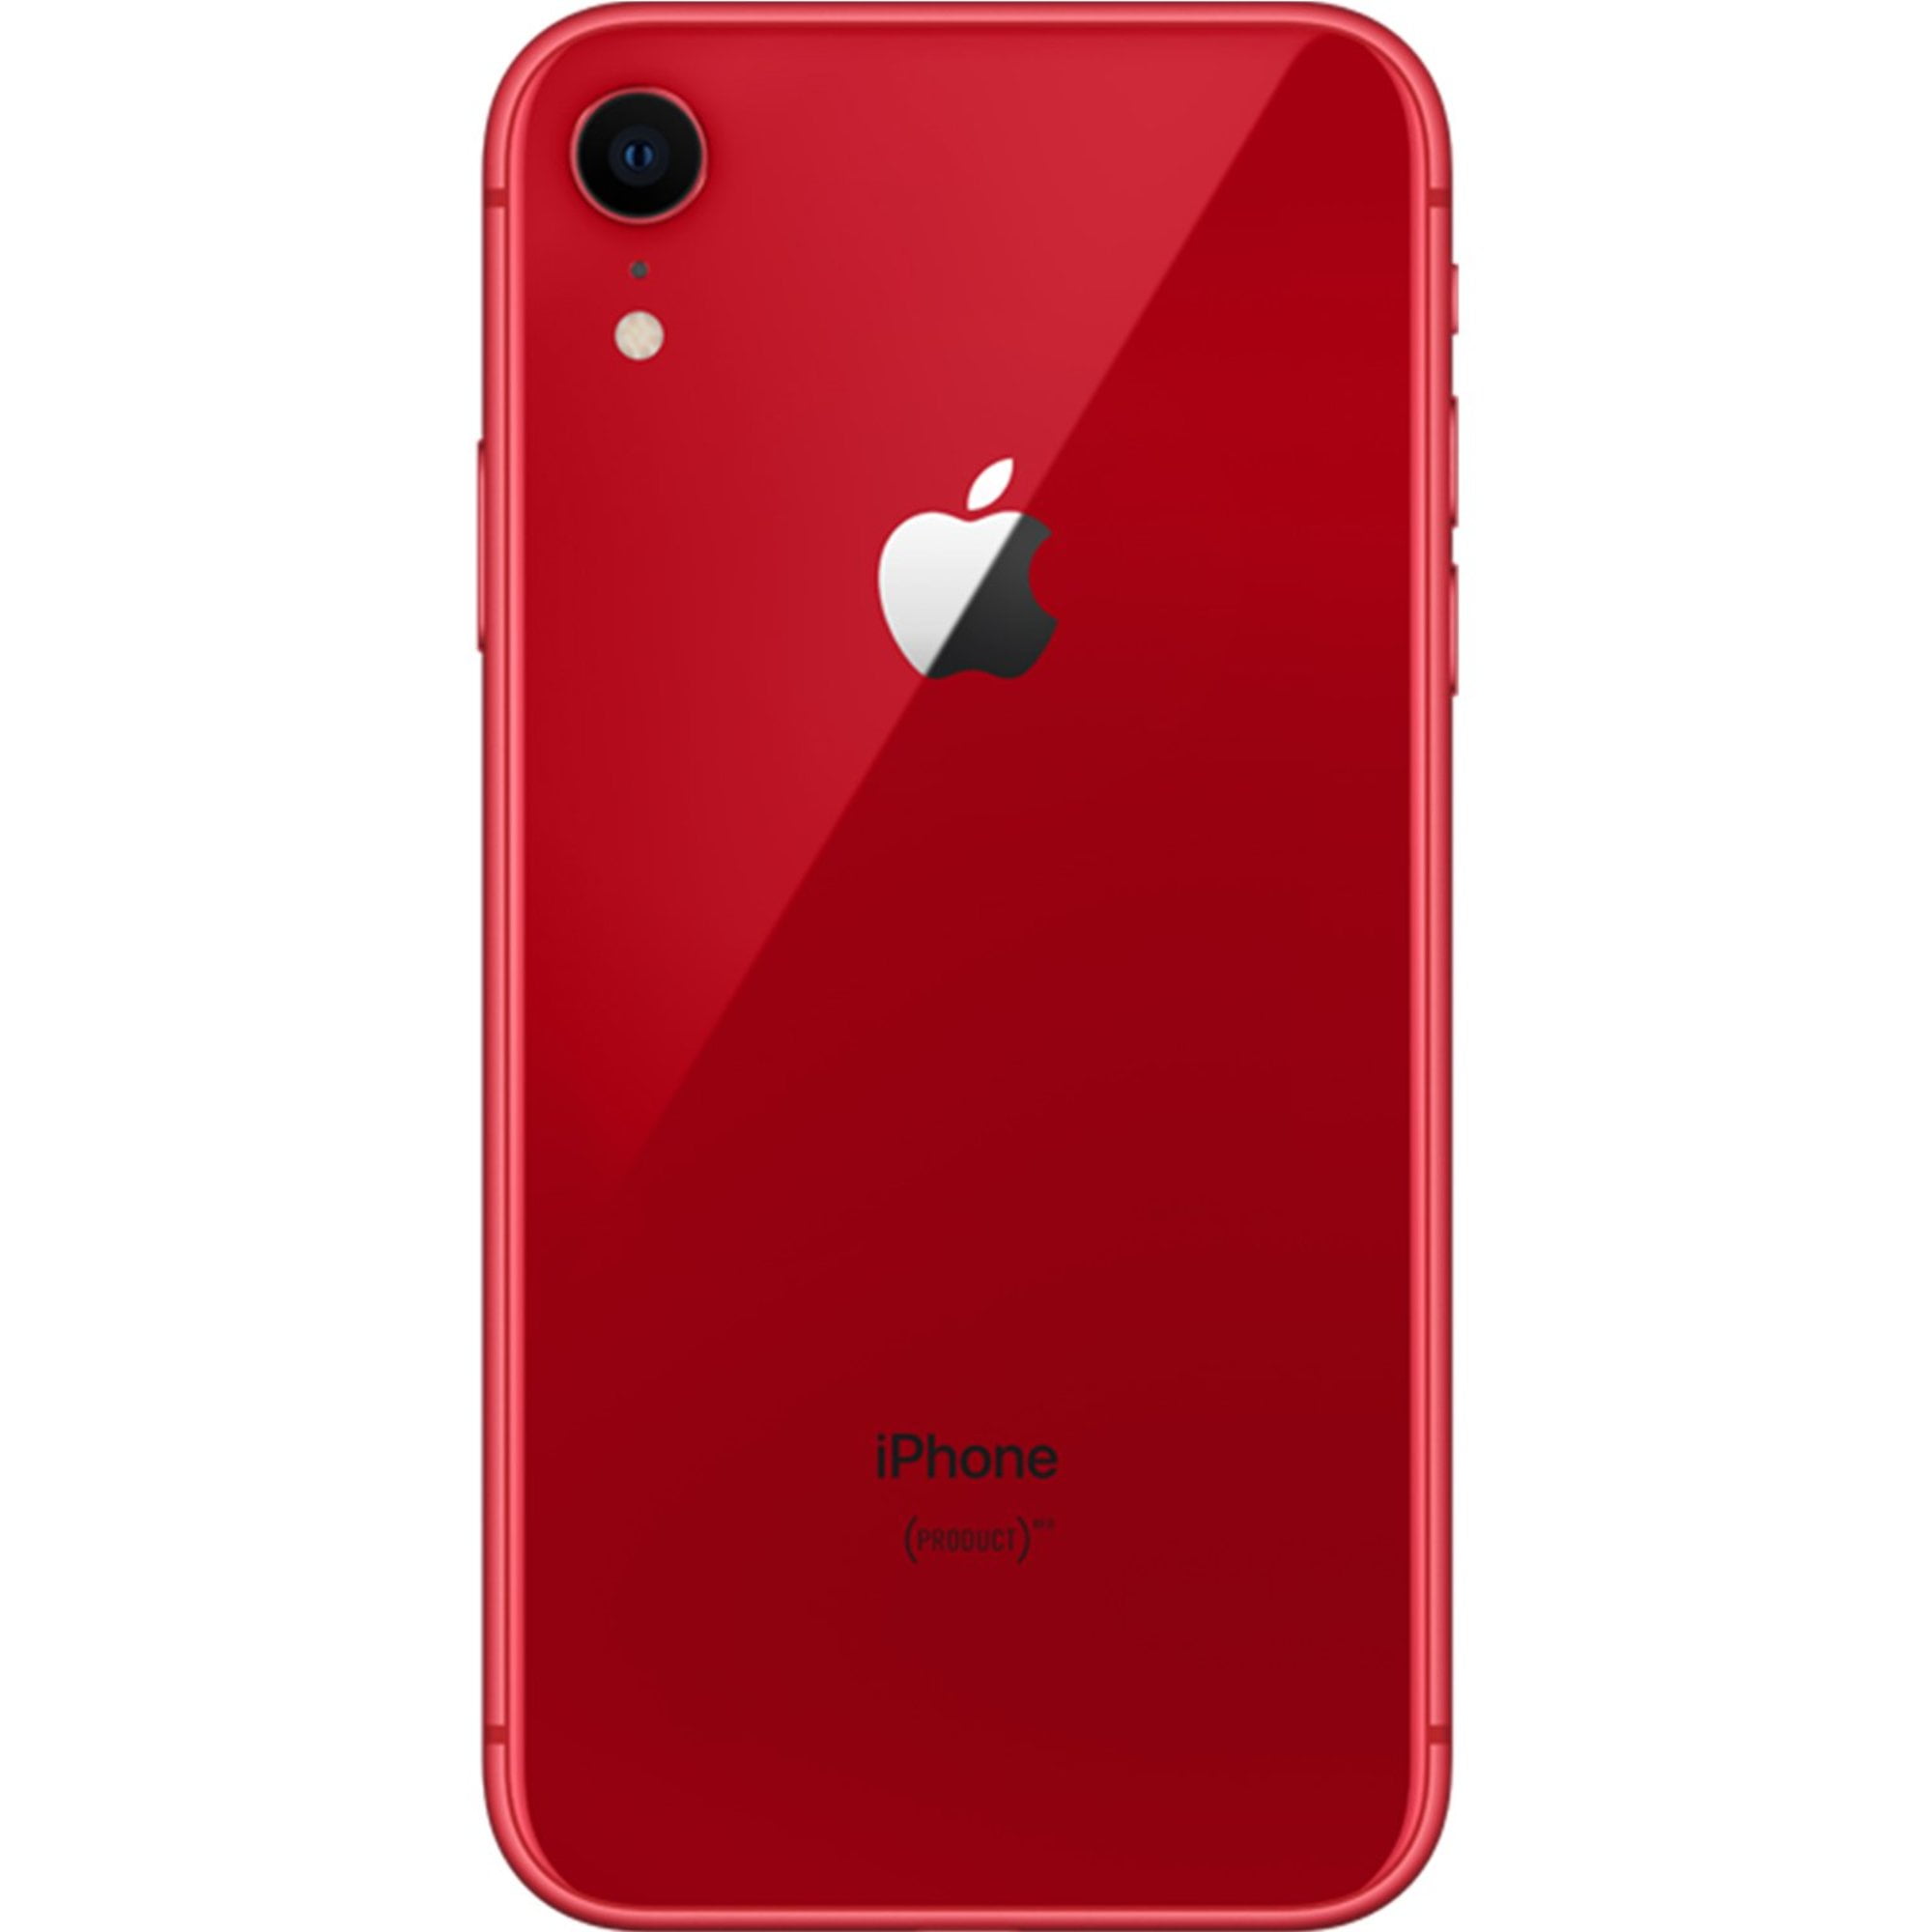 Apple iPhone XR 64GB Fully Unlocked (Verizon + Sprint + GSM 